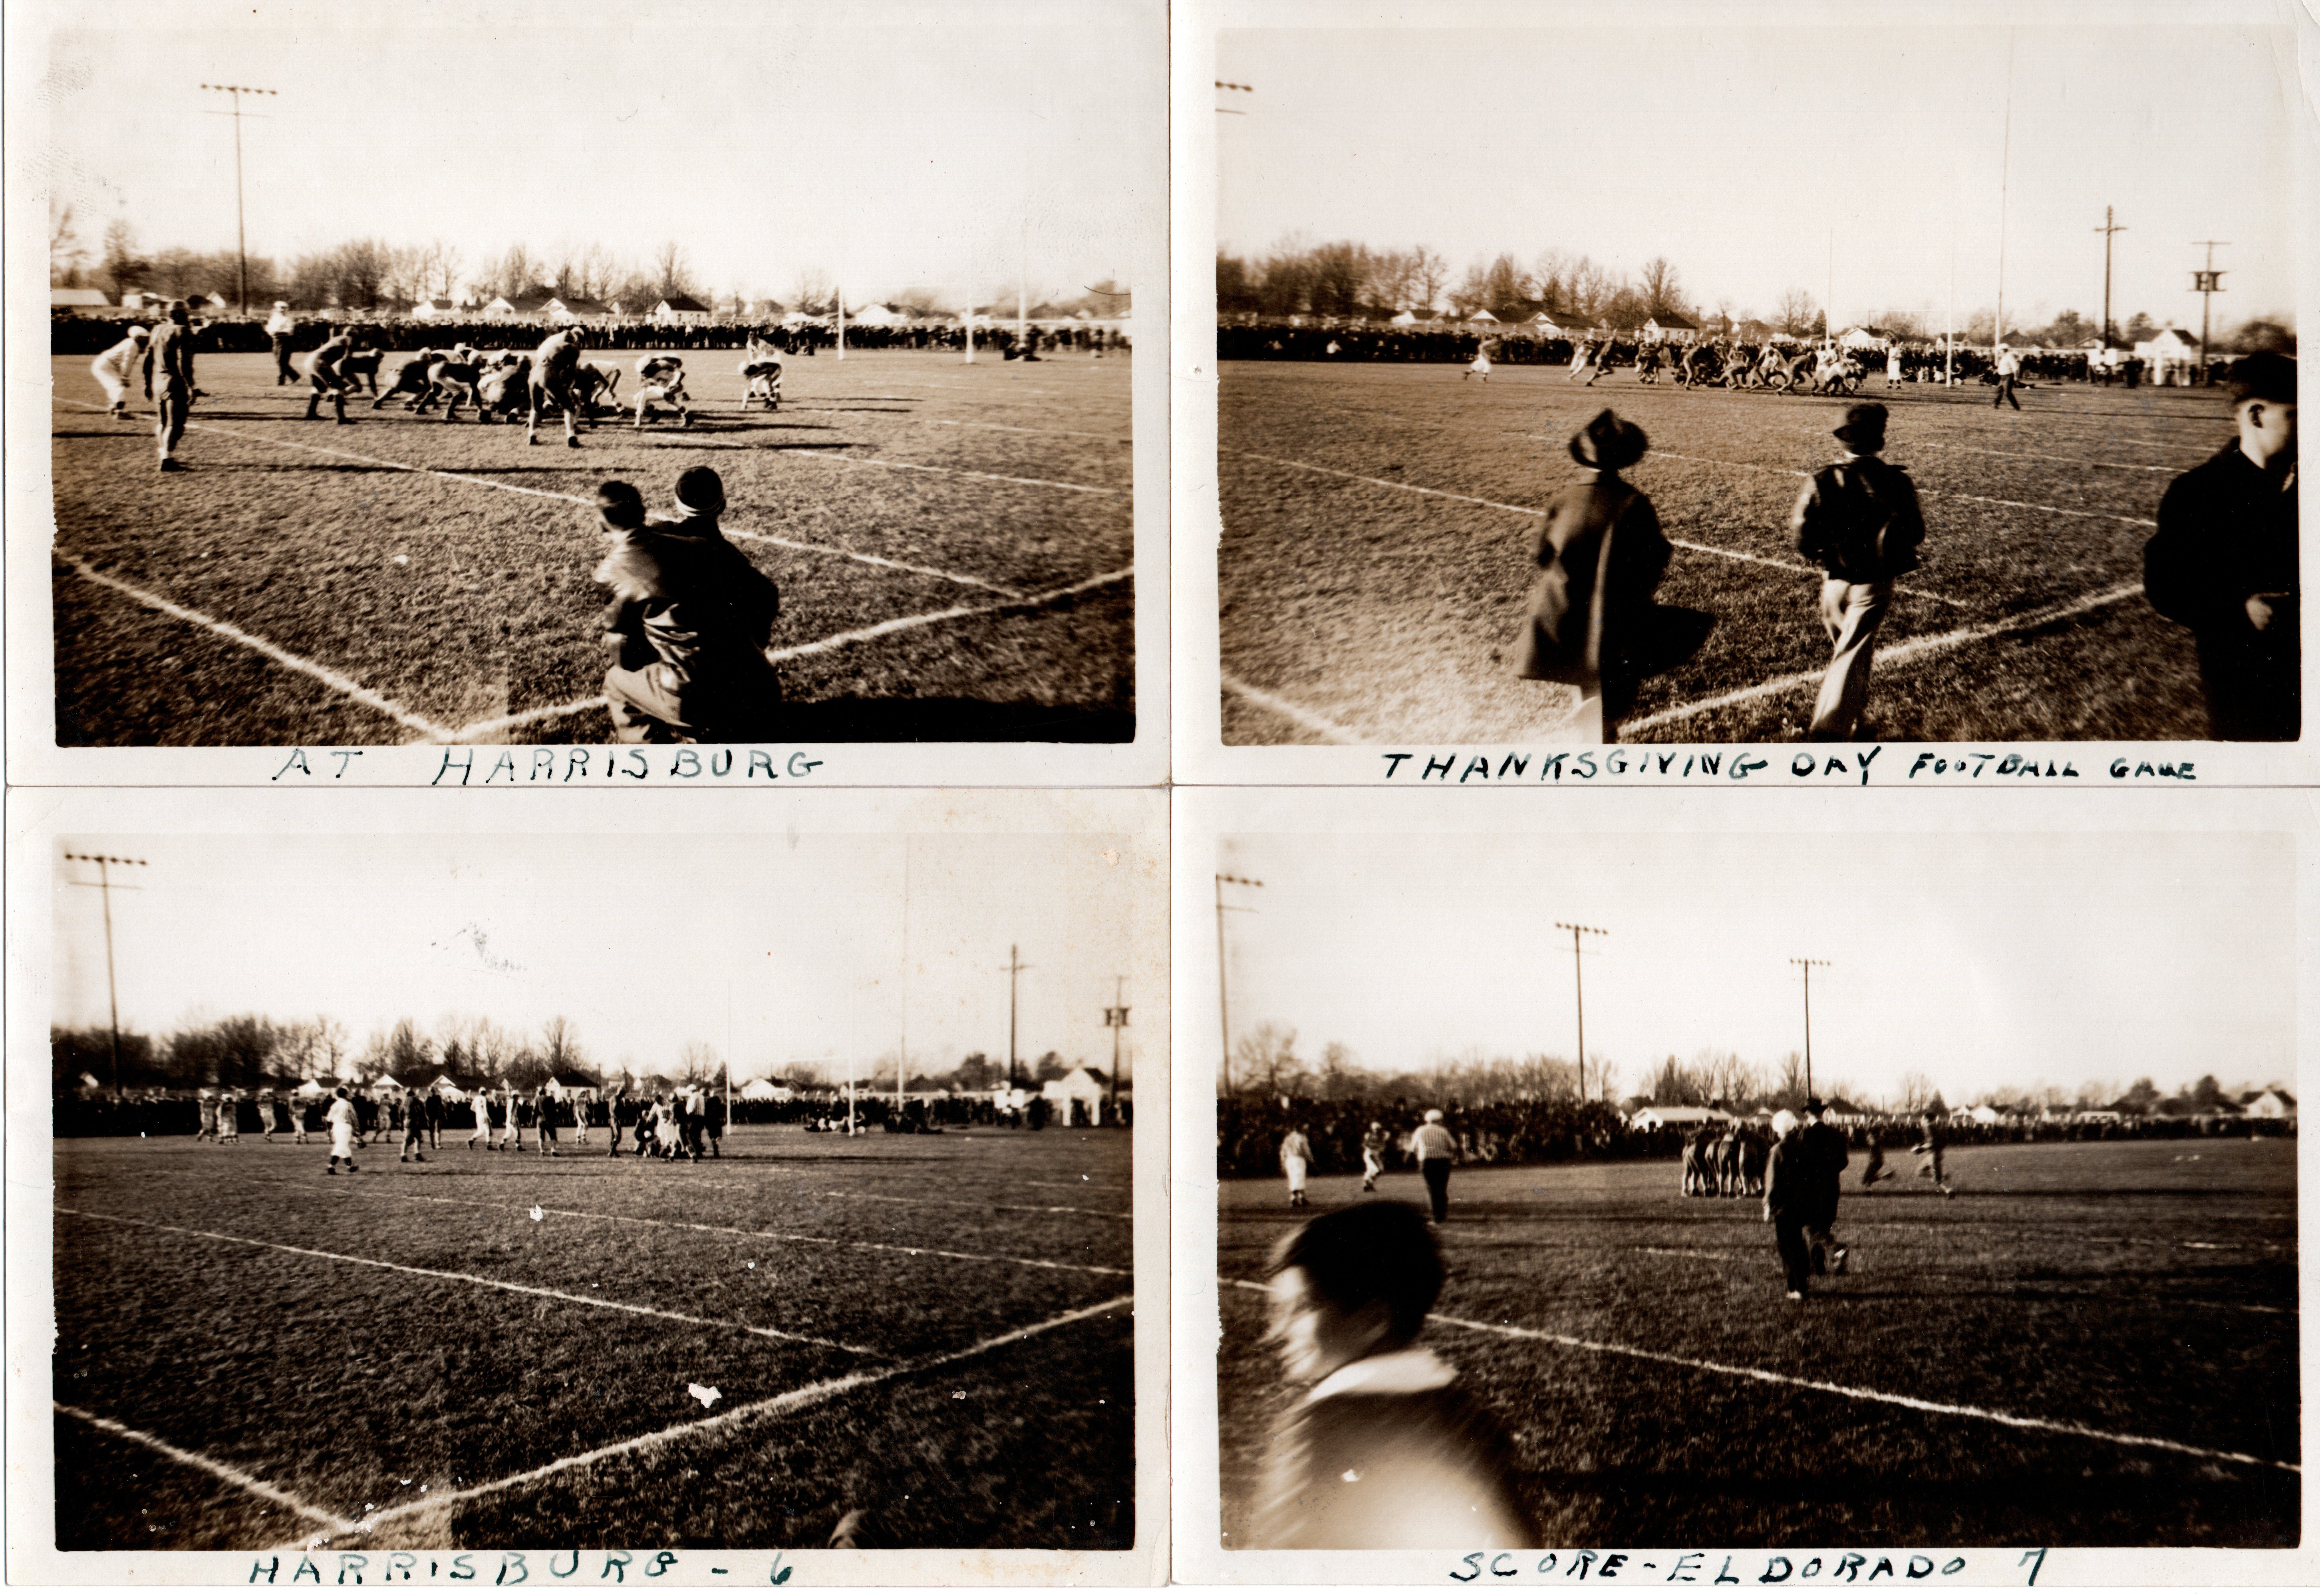 Harrisburg High School vs. Eldorado Township High School Thanksgiving Day Football Game c.1944